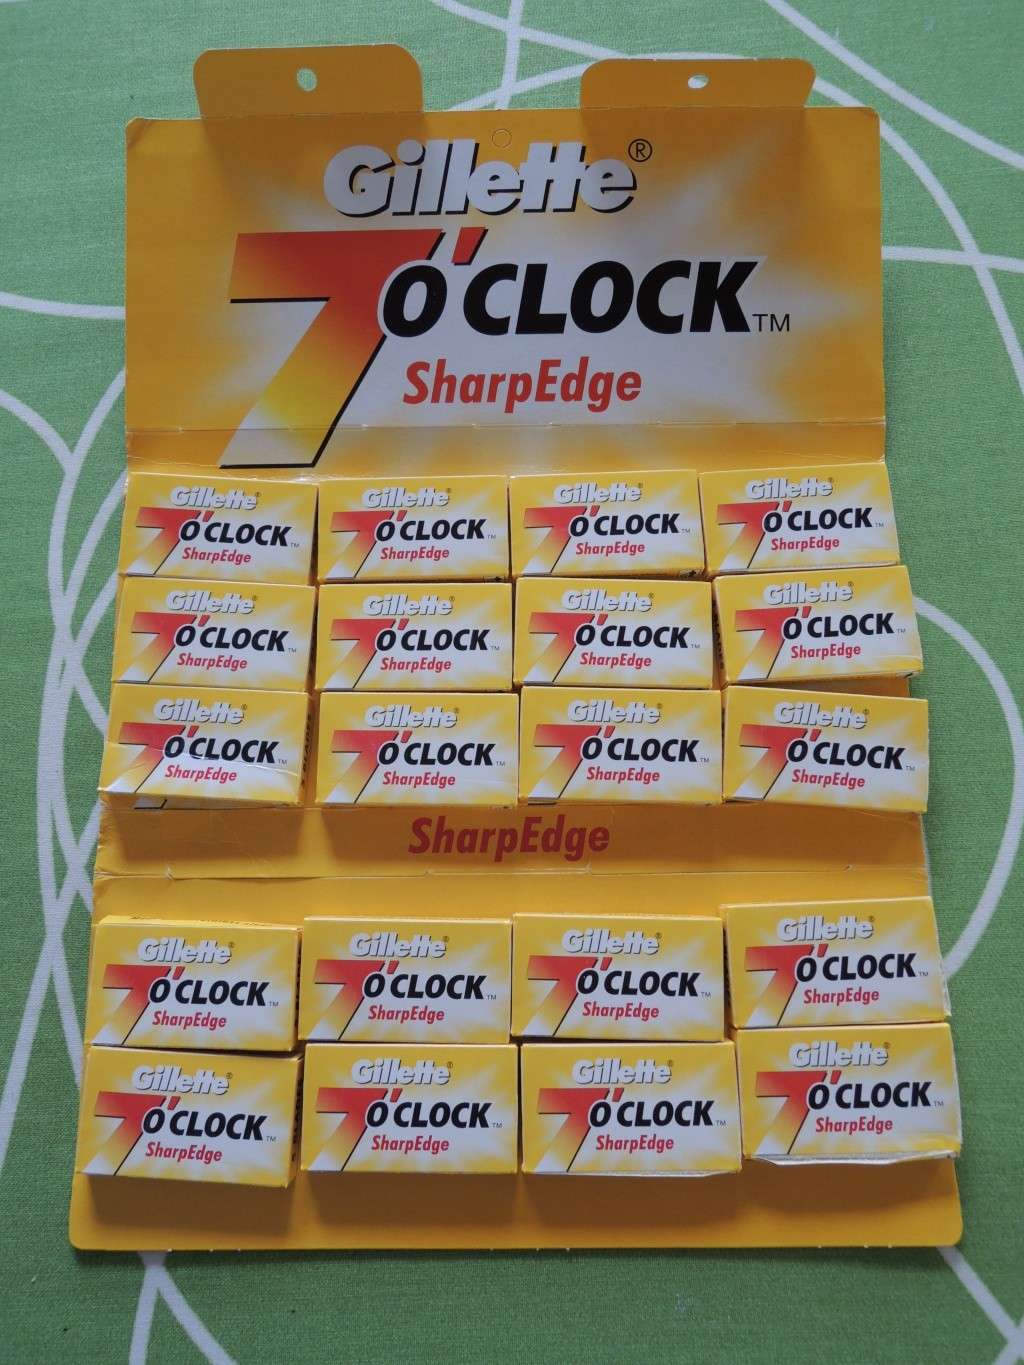 Gillette 7 O'Clock sharp edge (jaune) - Page 5 Dscn0011